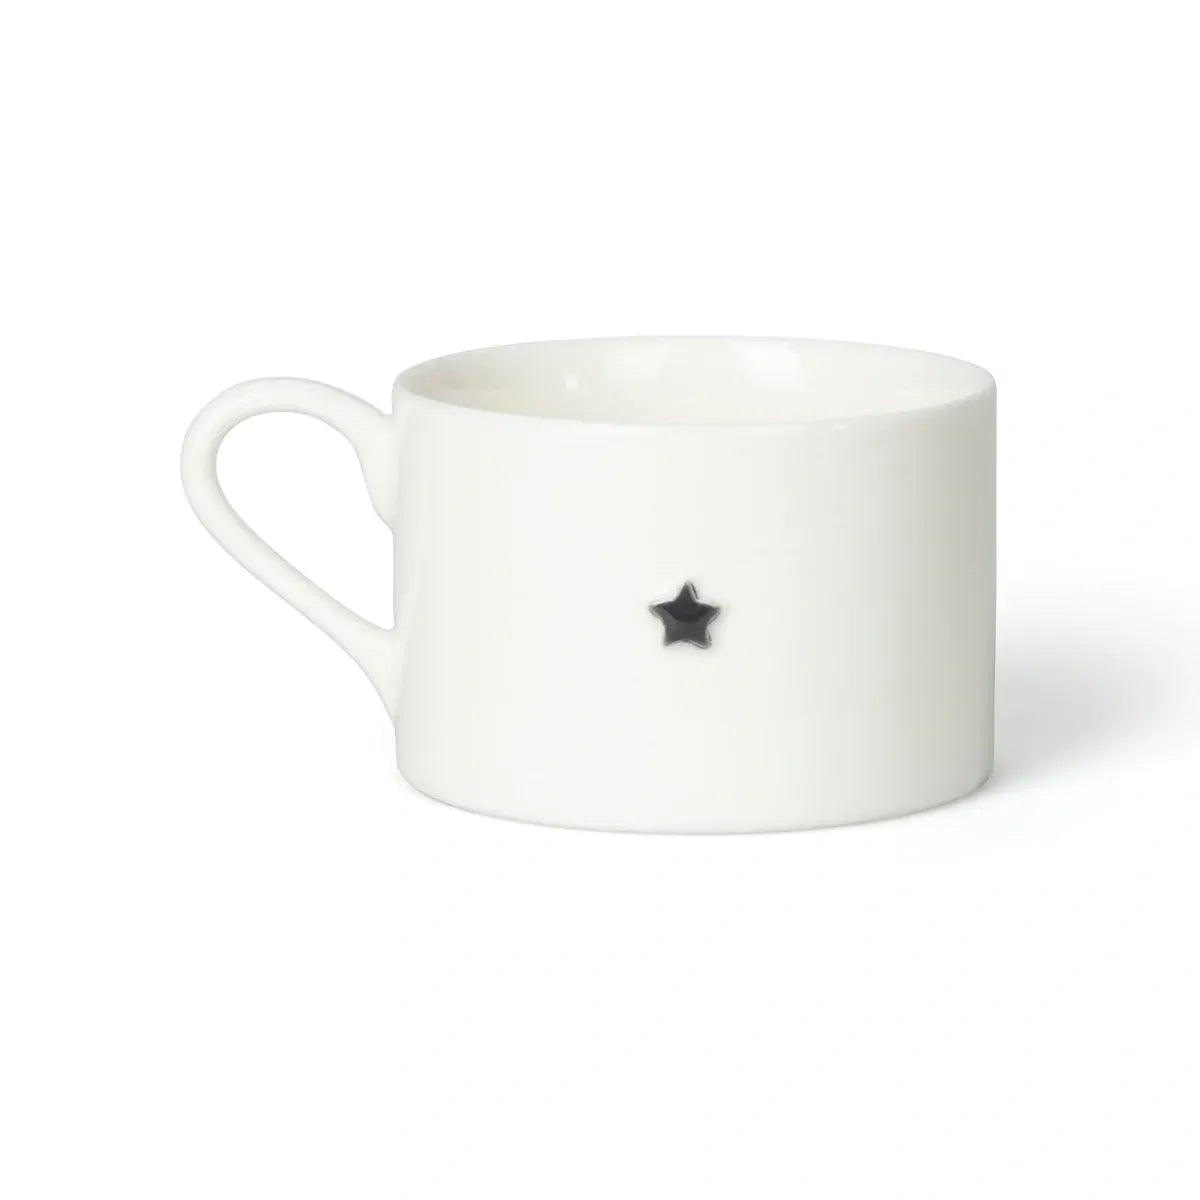 Chalk UK white or charcoal porcelain mug